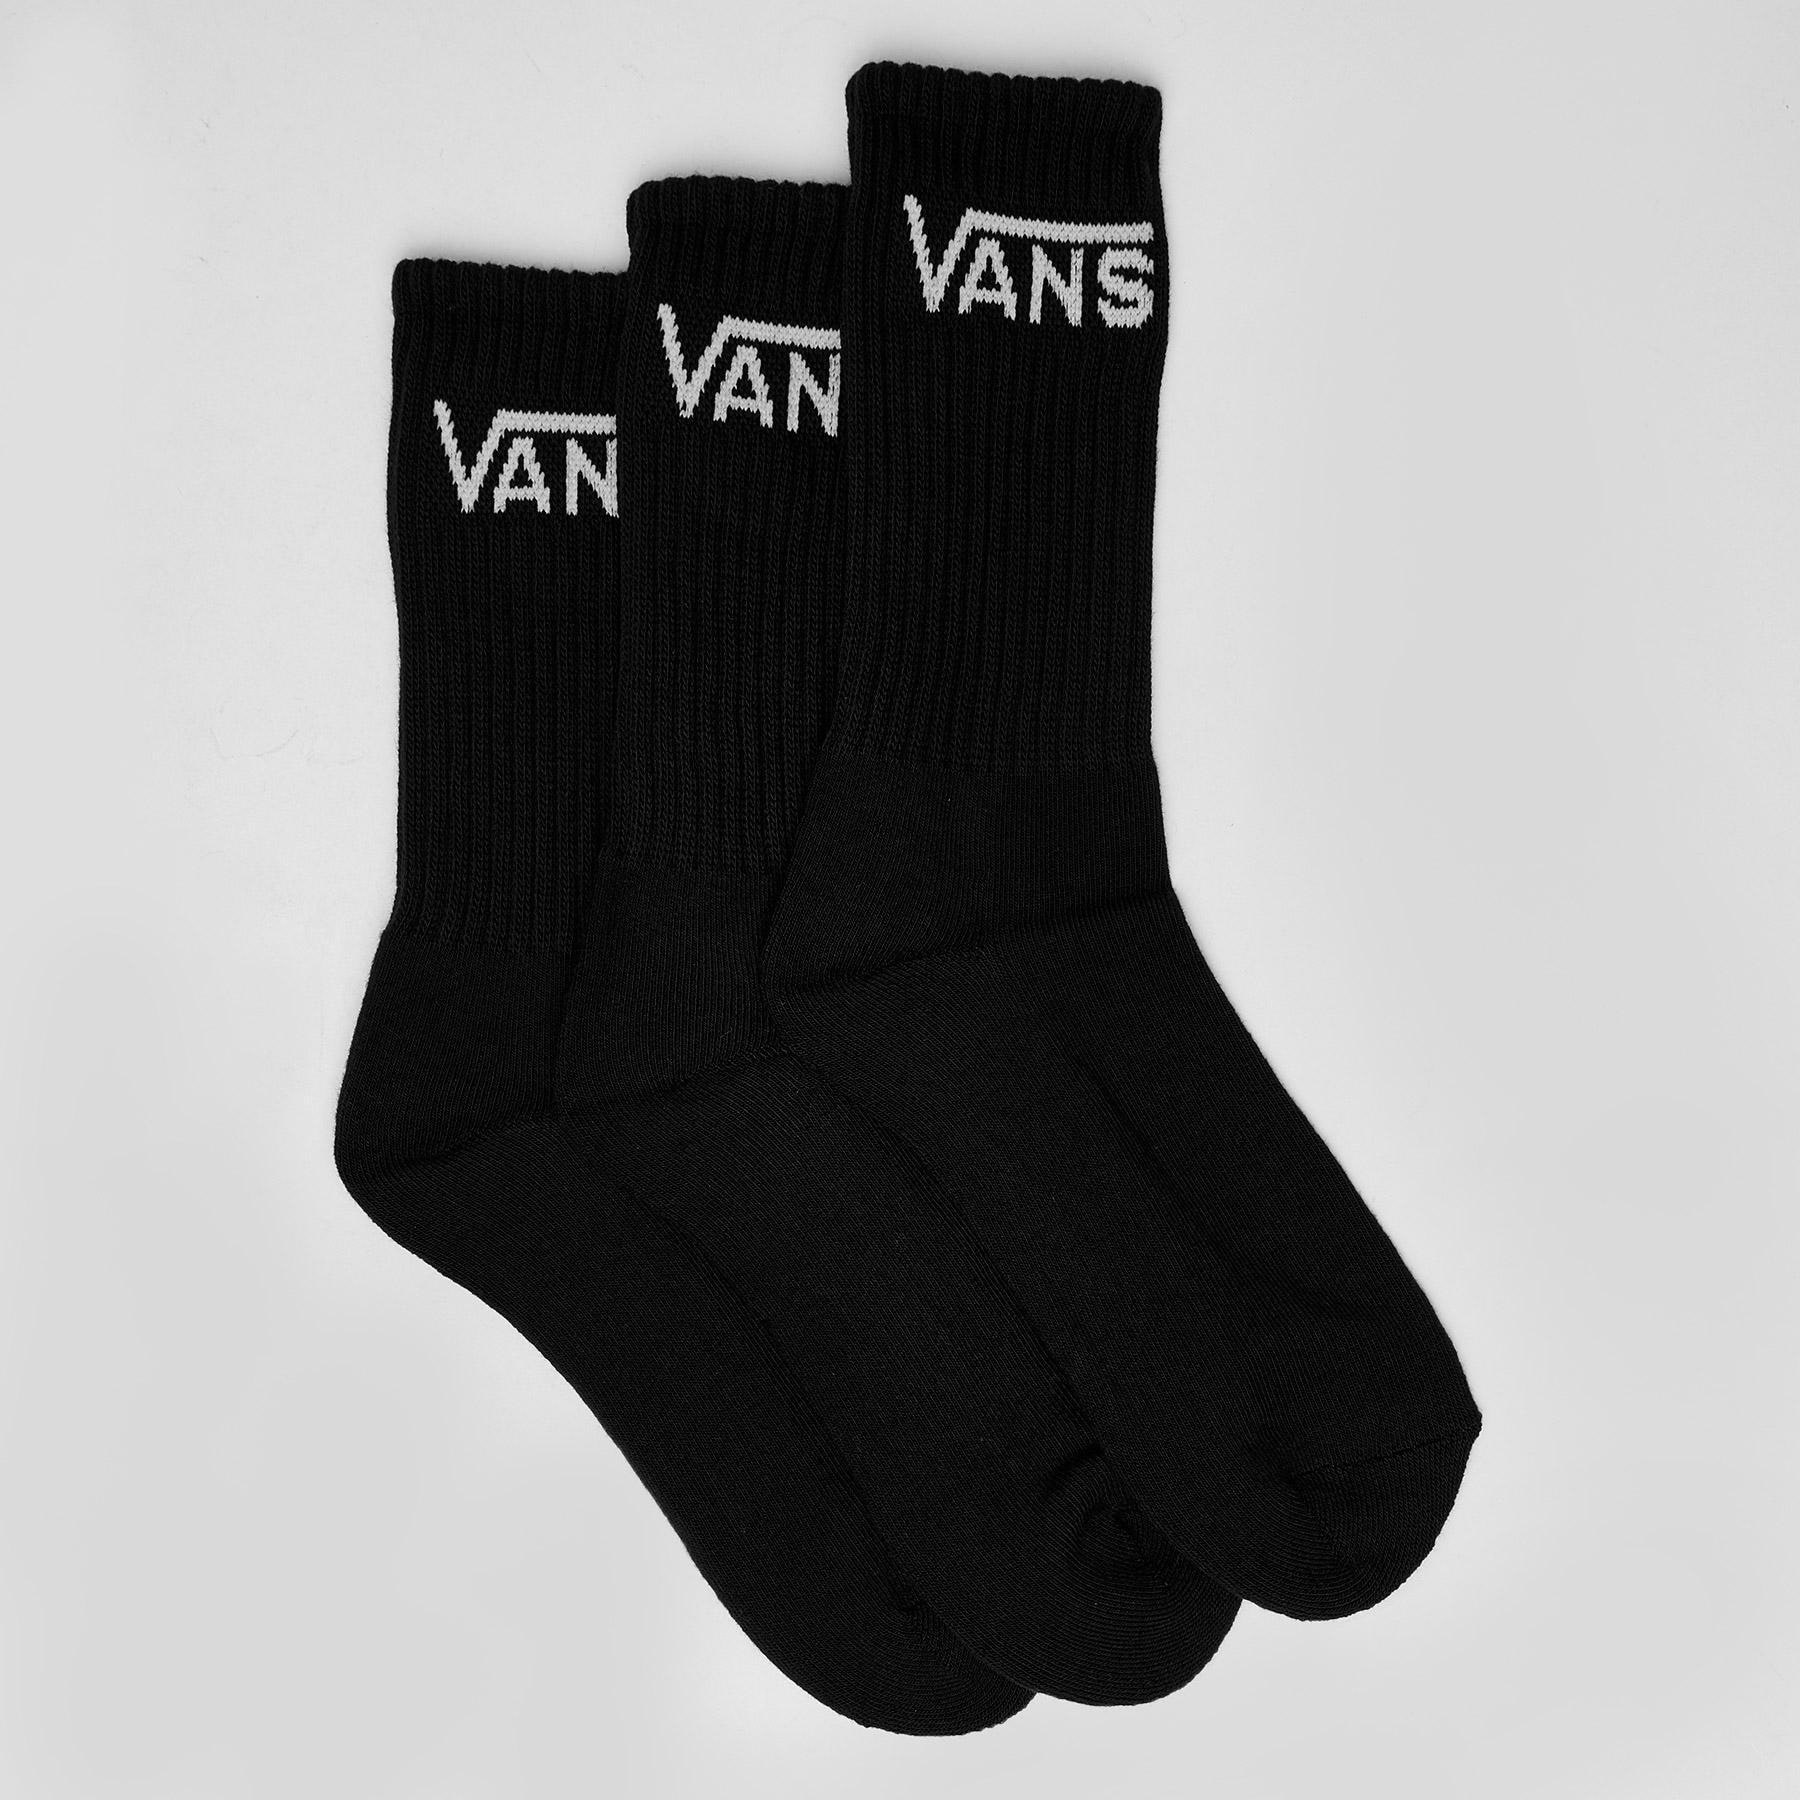 Vans Classic Crew Socks 3 Pack S/M In Black - Fast Shipping & Easy ...